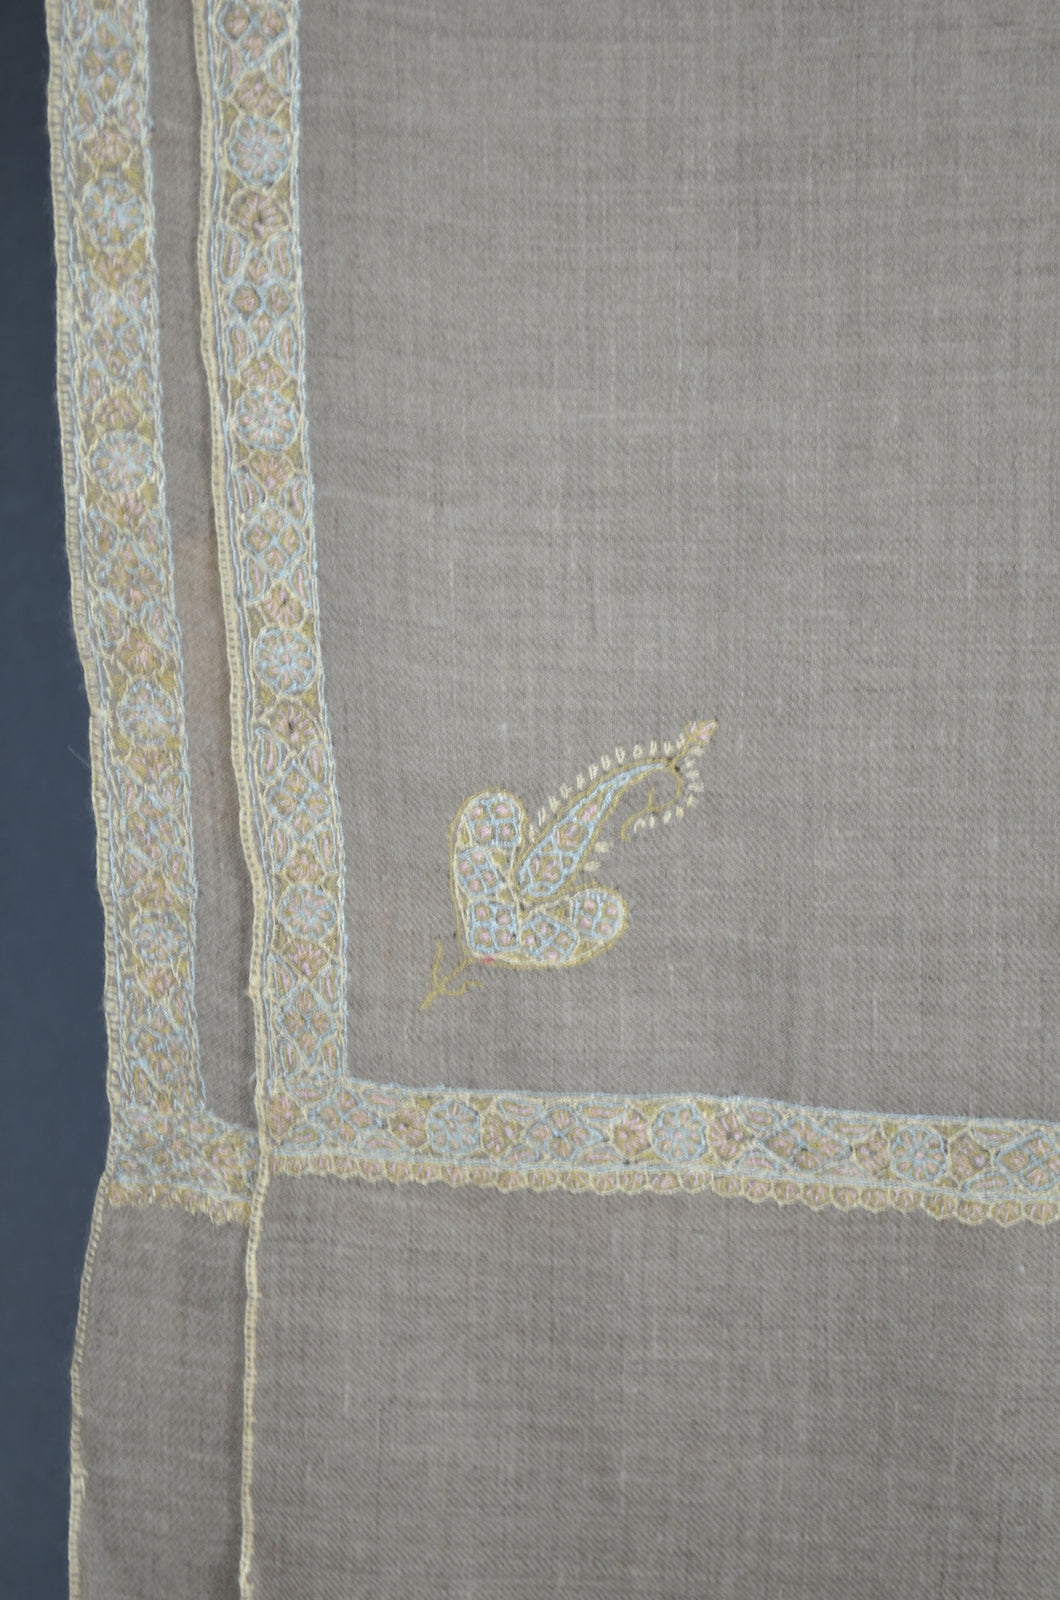 White and Beige Border Embroidery Cashmere Pashmina Shawl